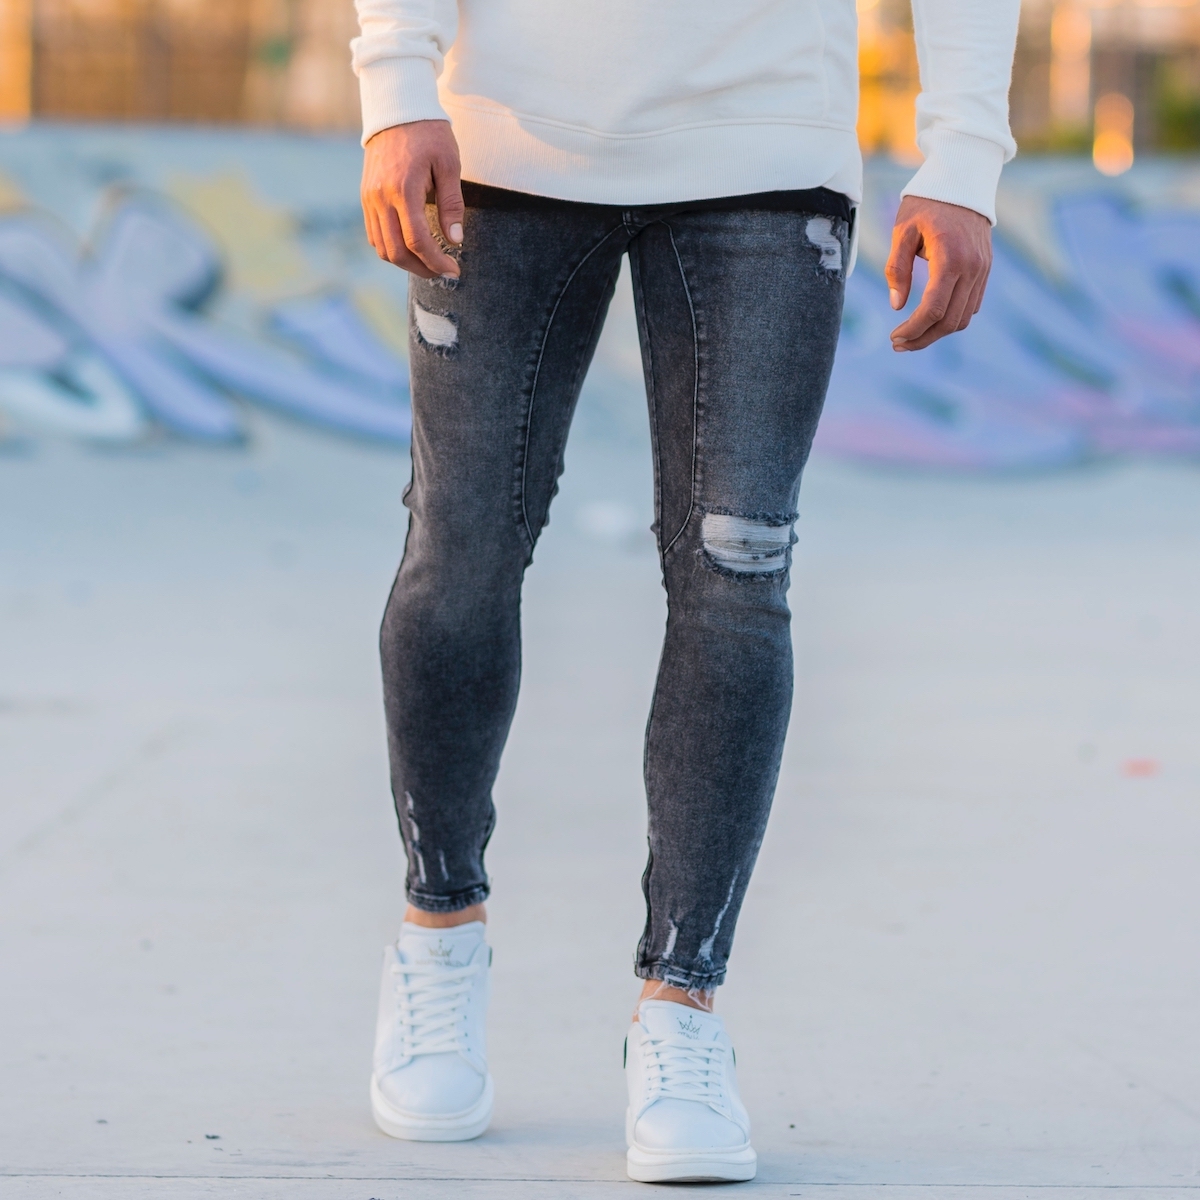 patchwork jeans mens